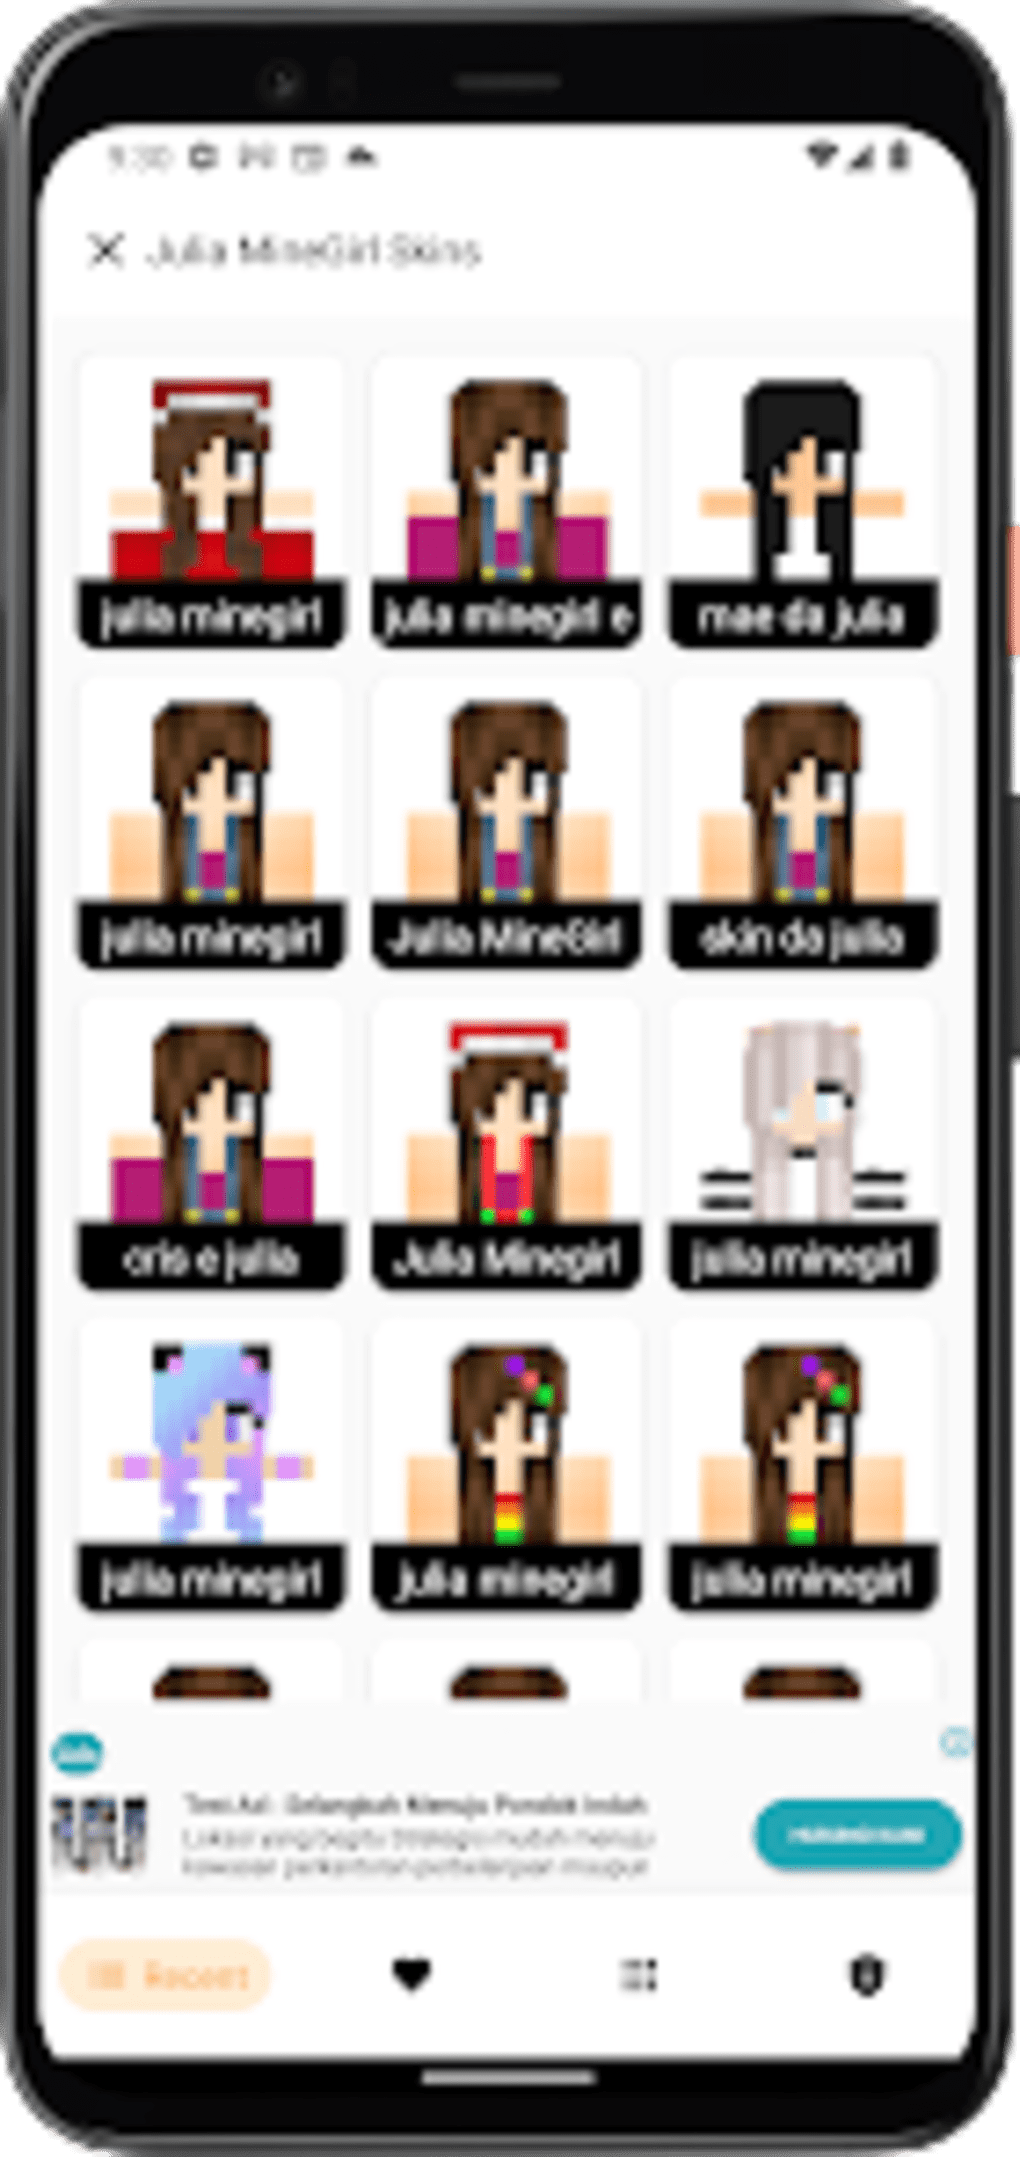 About: Skin Julia Minegirl For Minecraft PE (Google Play version)